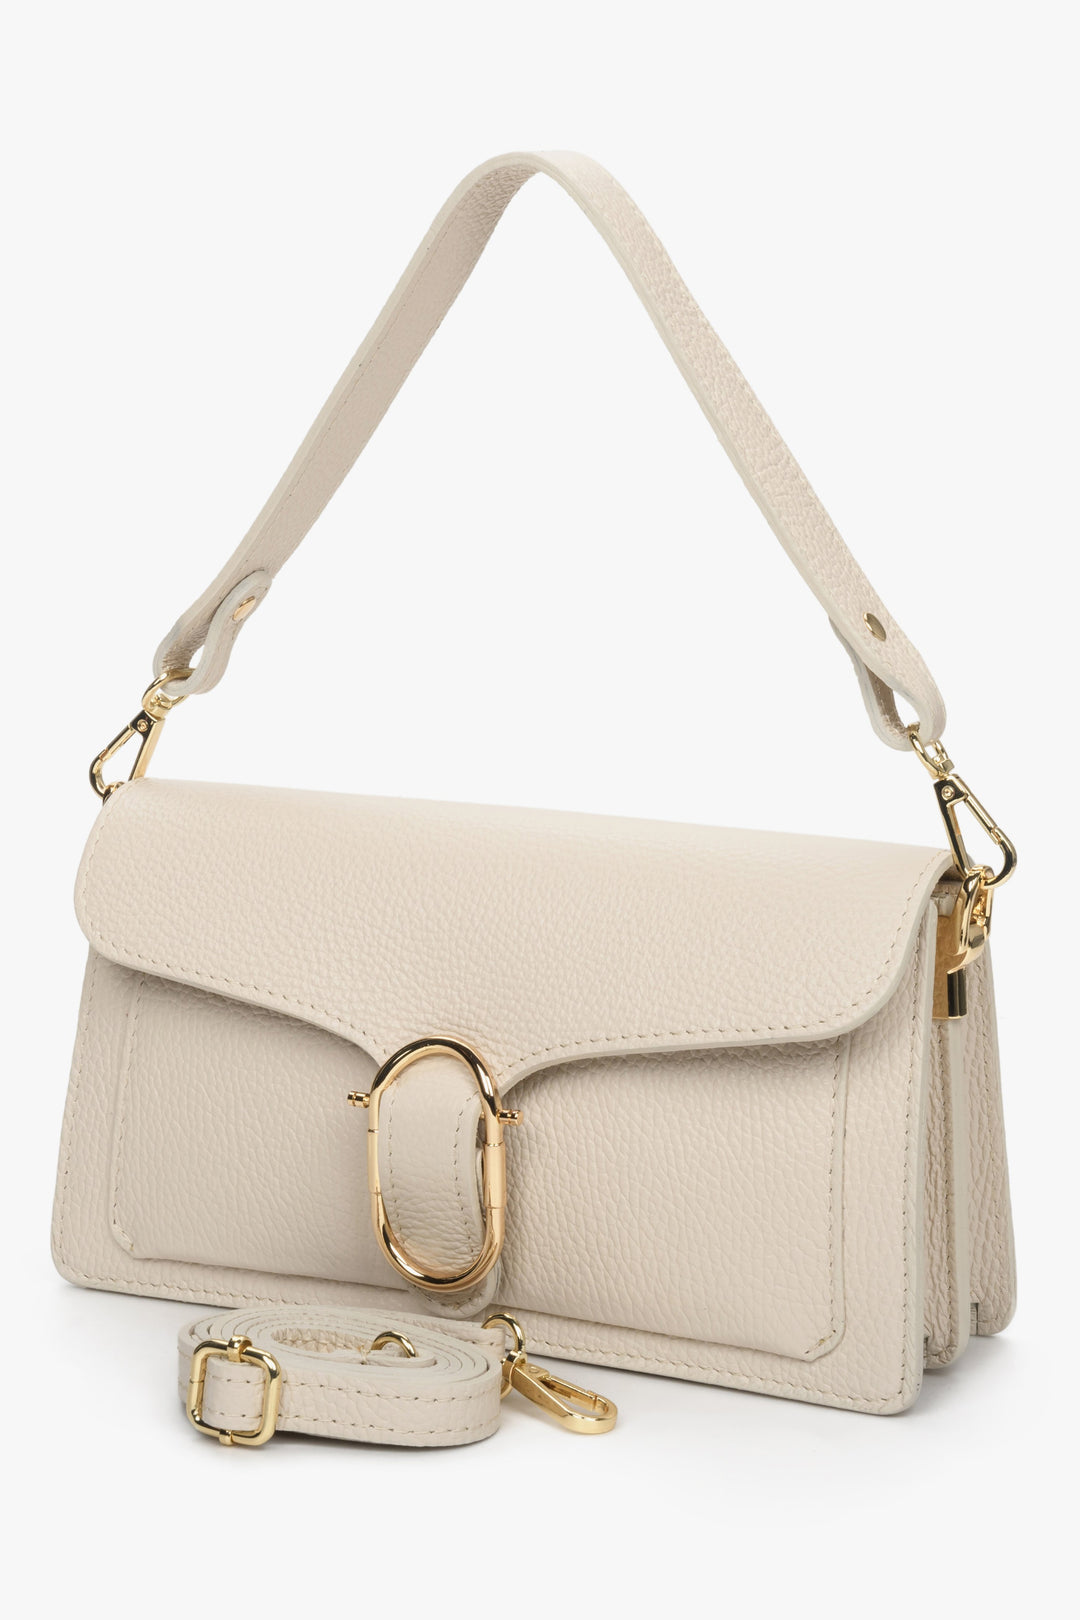 Small light beige women's Estro handbag made of Italian natural leather.